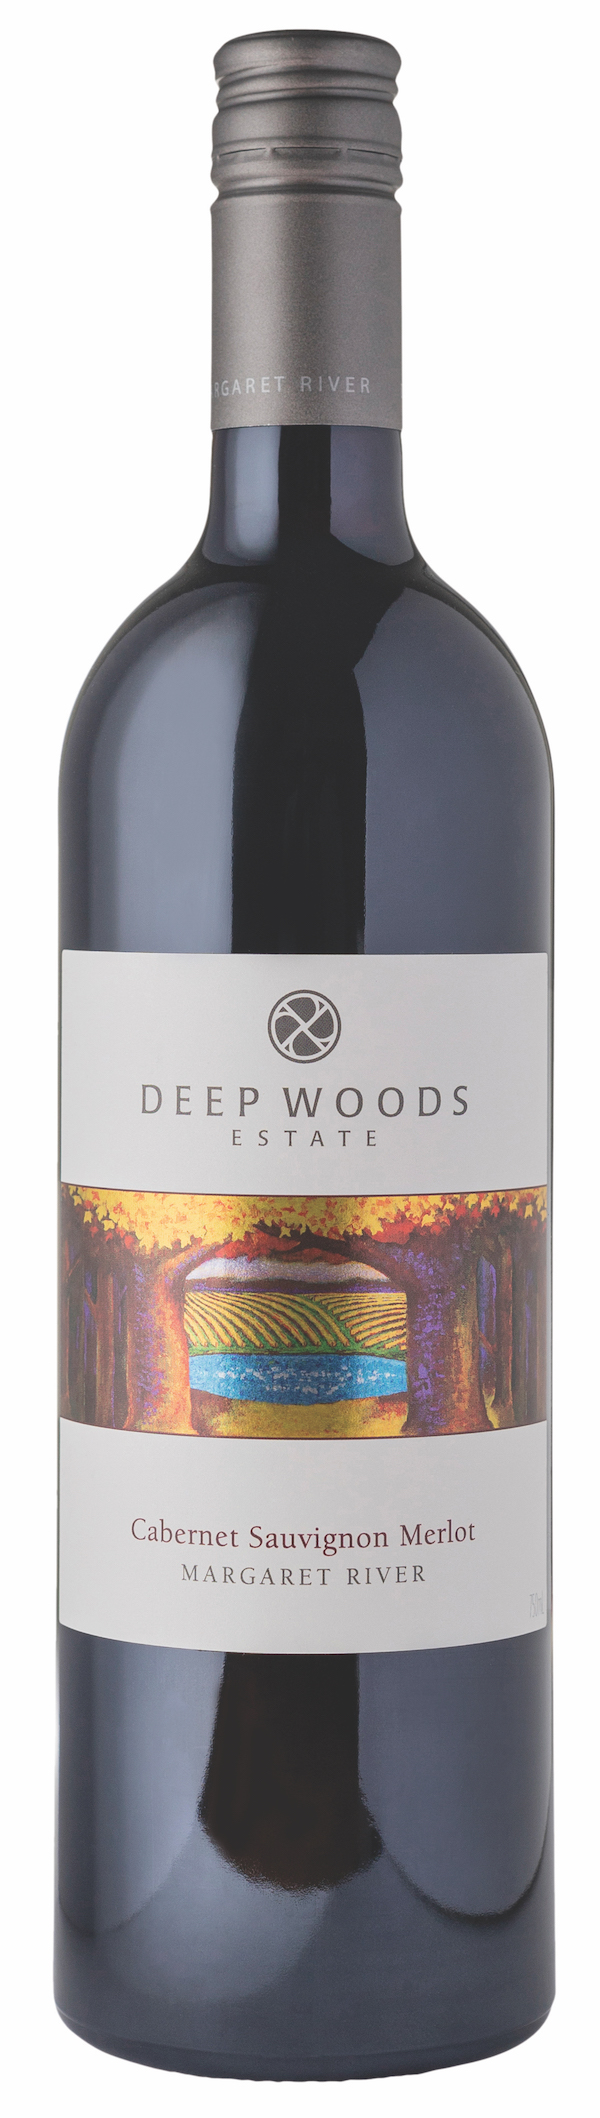 Wine Bottle for Deep Woods Estate Cabernet Sauvignon Merlot